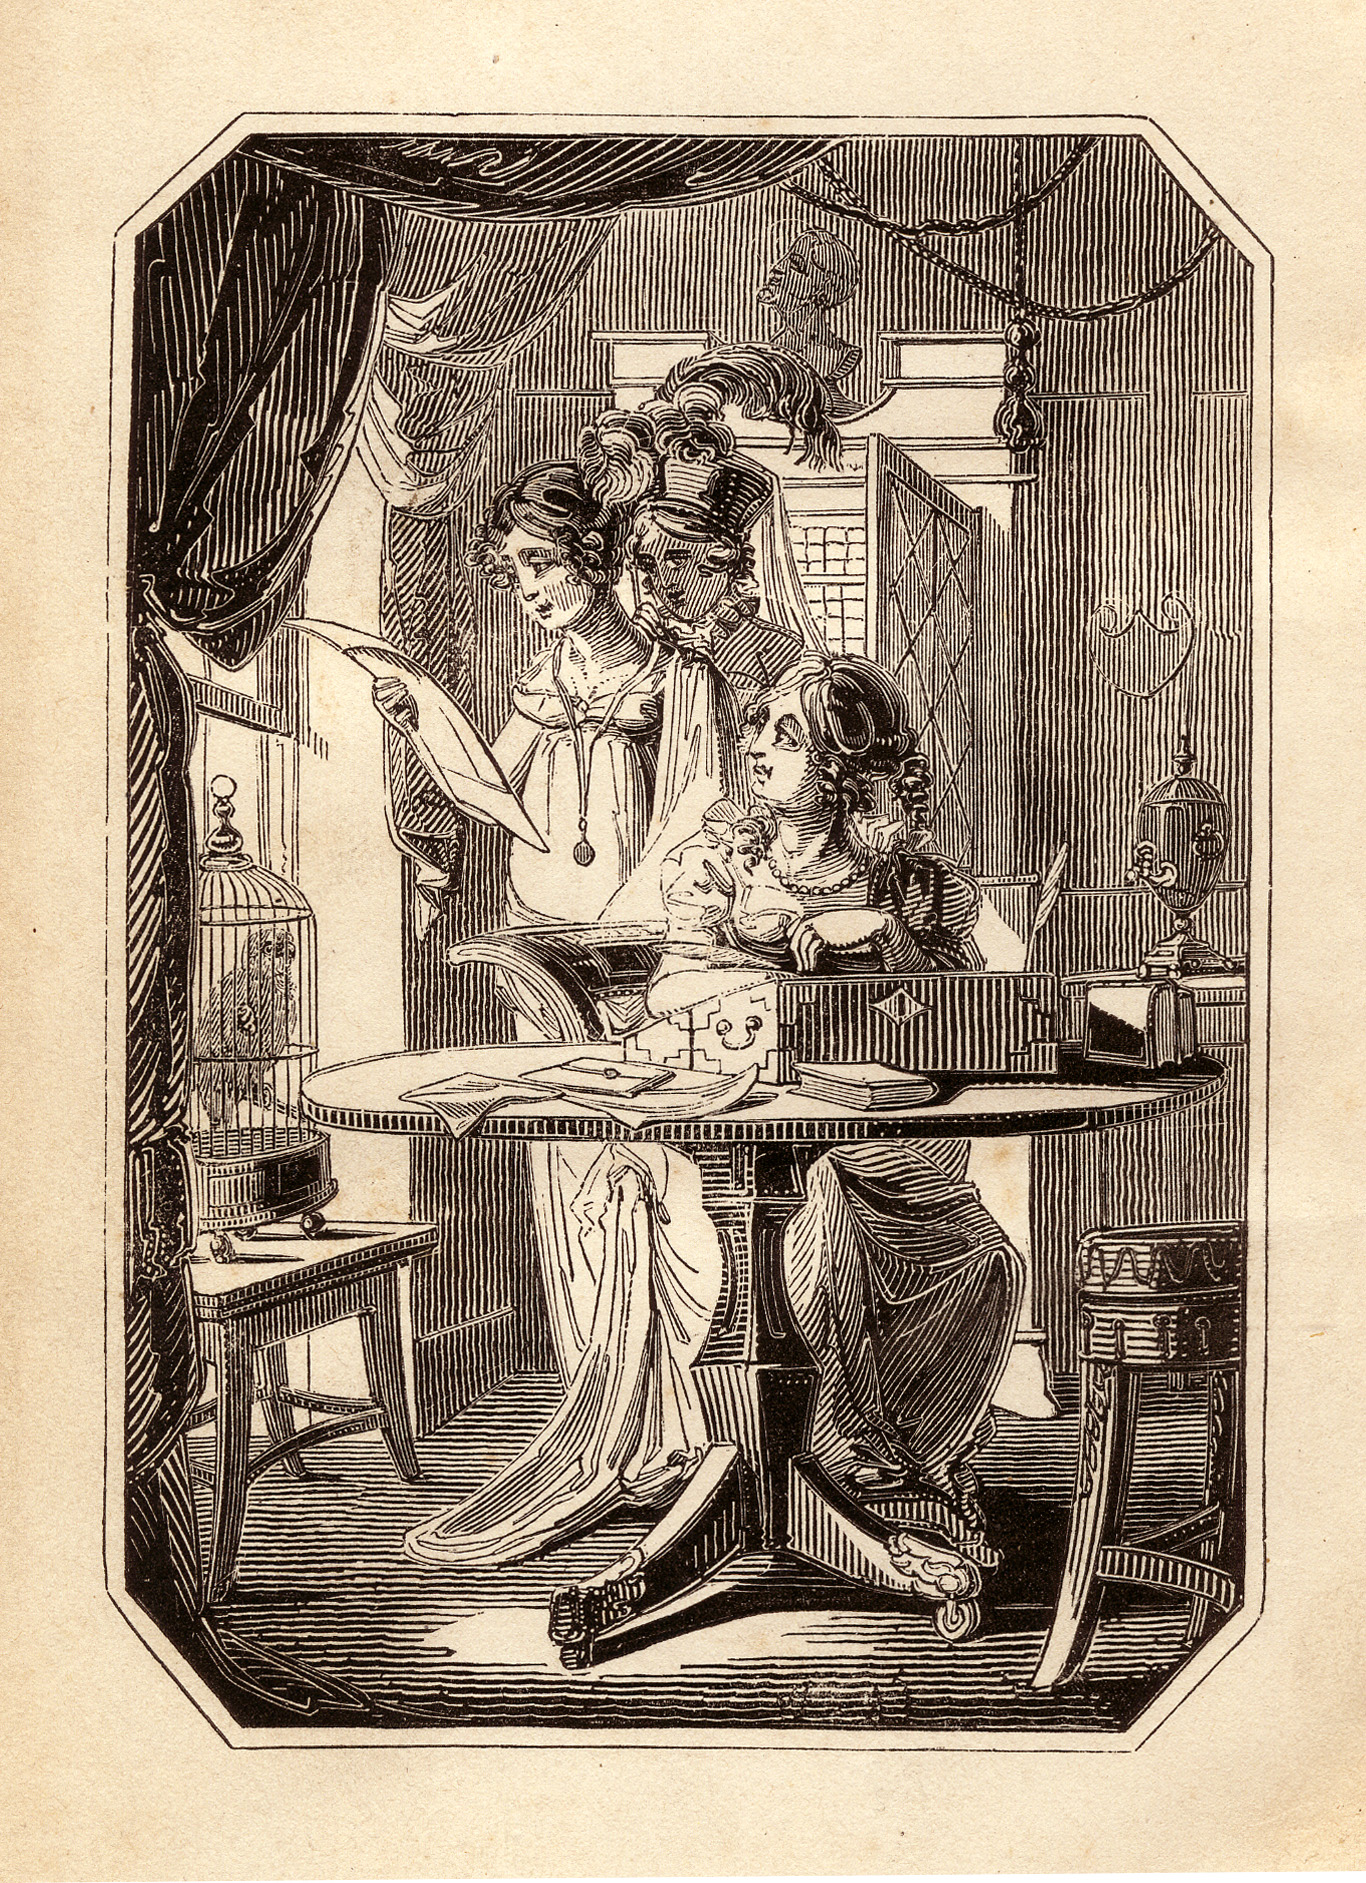 Jane Austen at Writing Desk